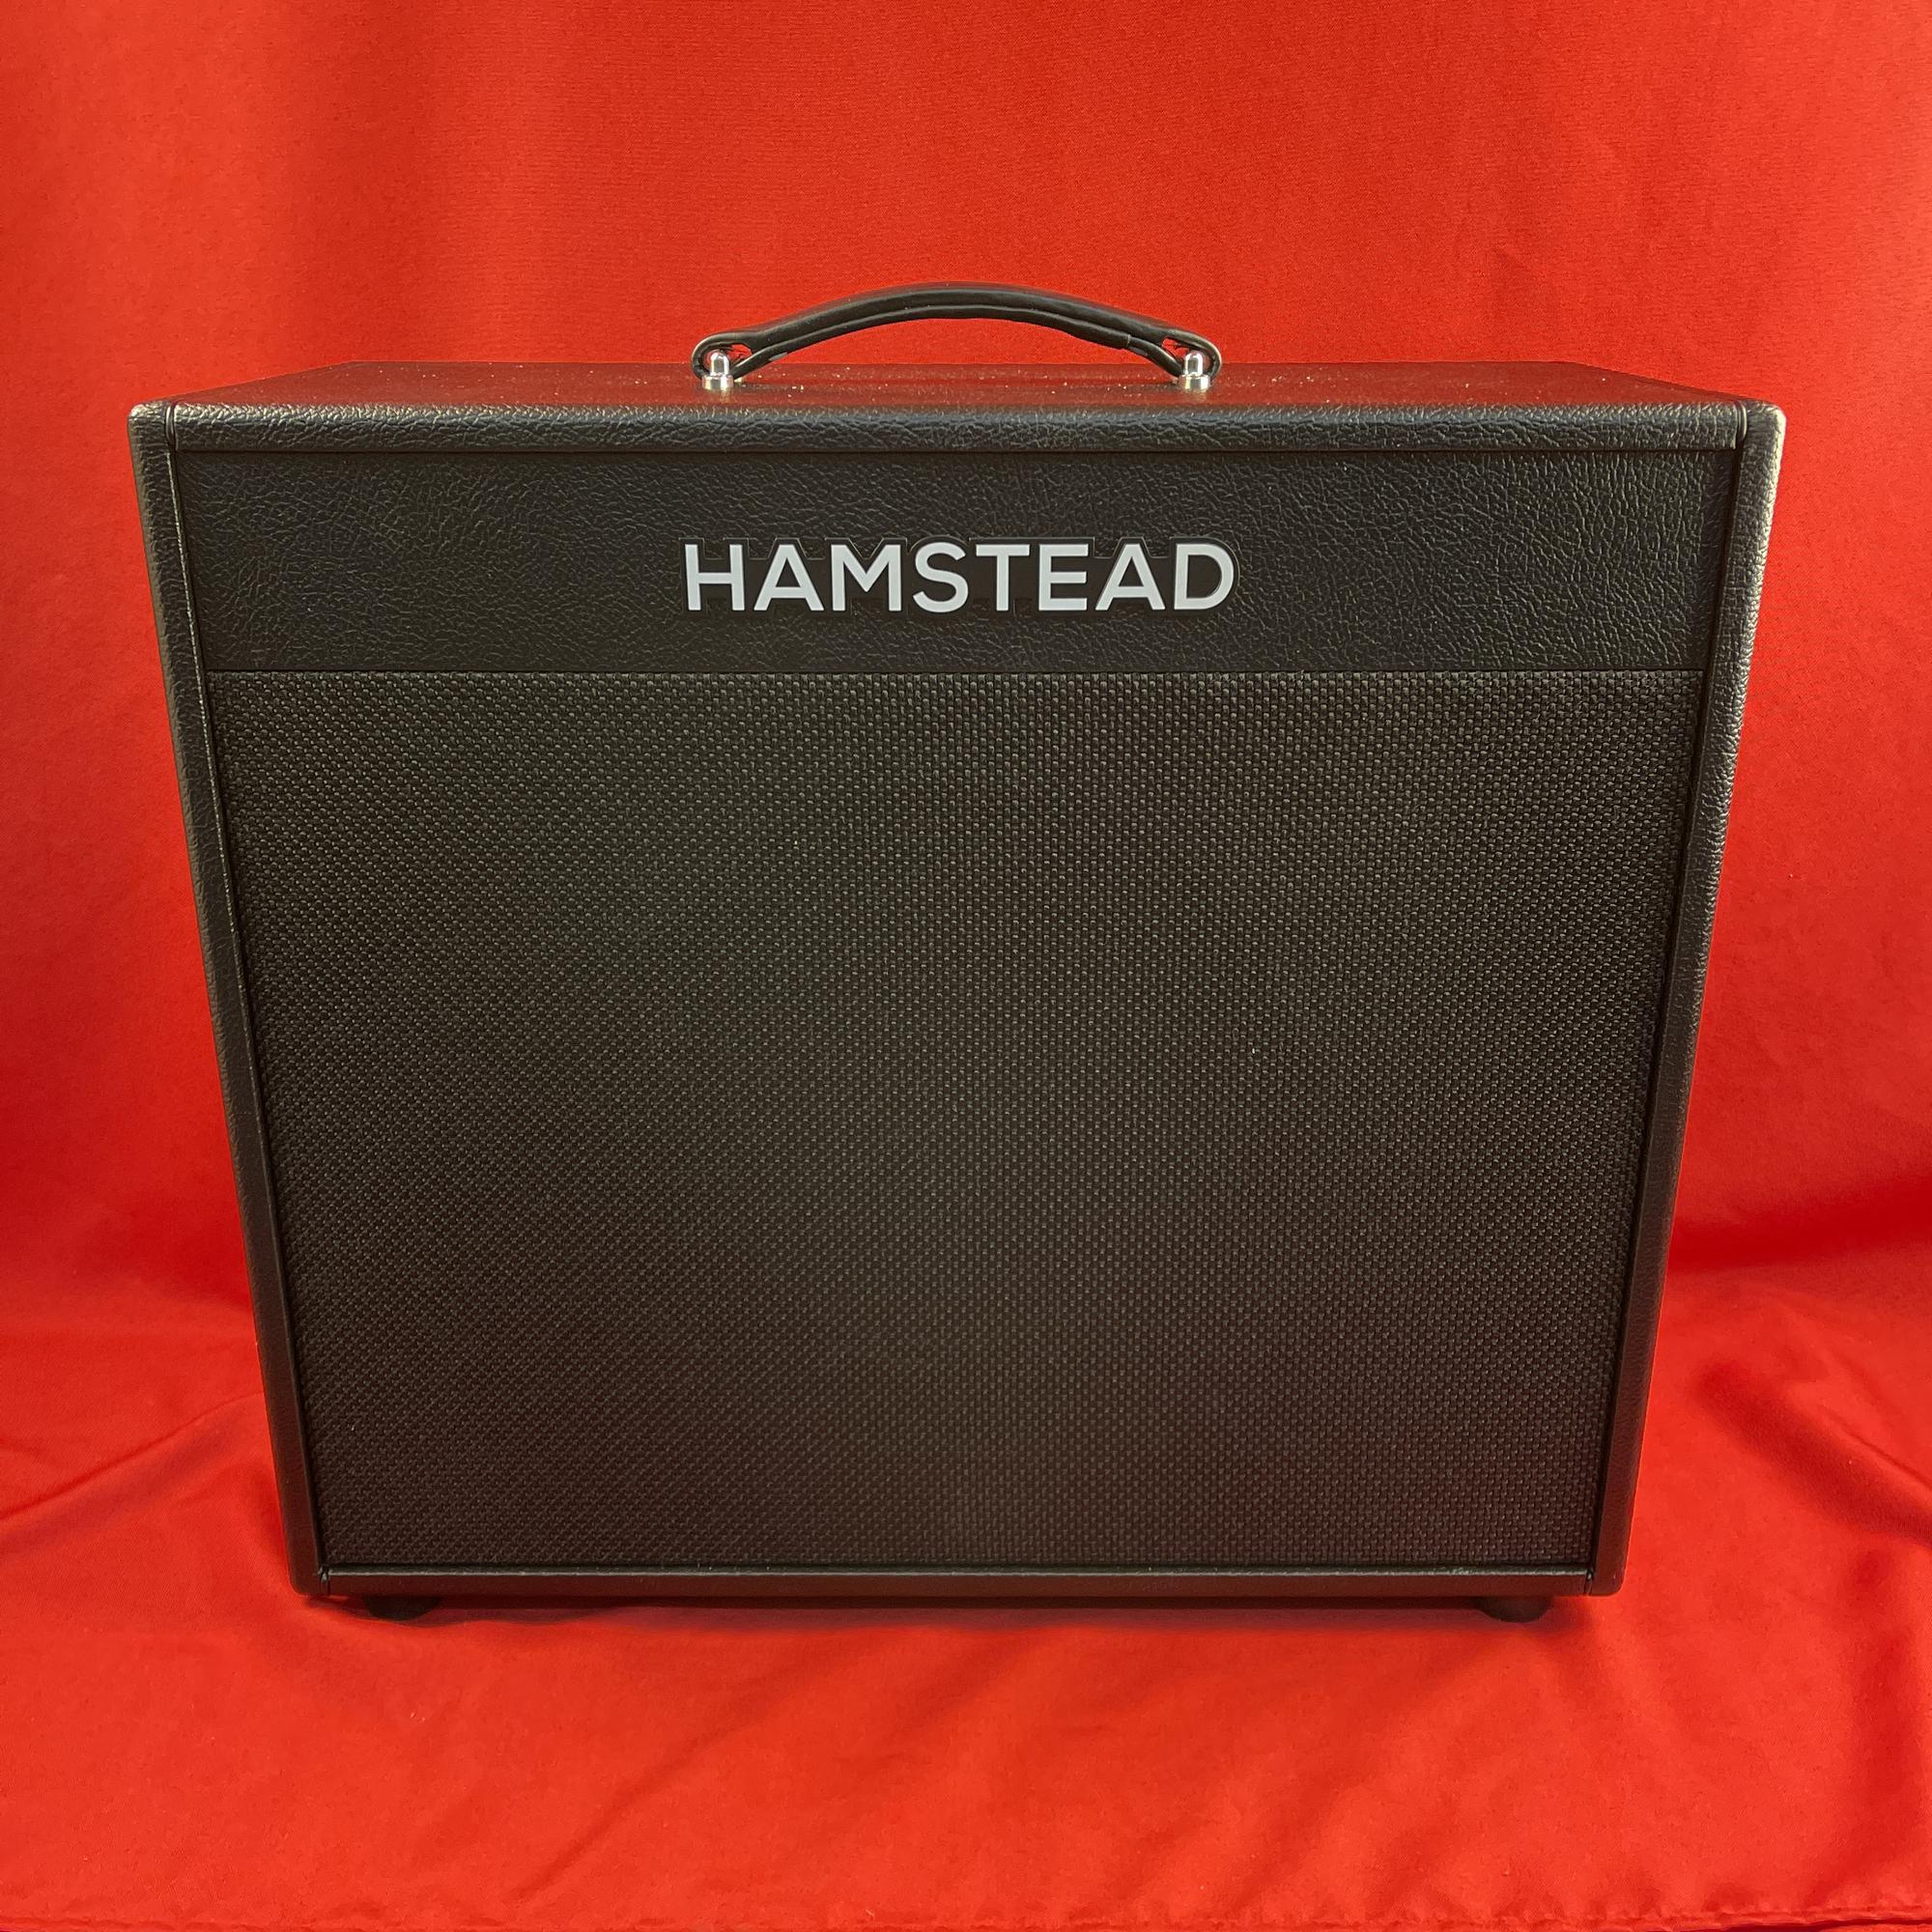 [USED] Hamstead Soundworks 1x12 Guitar Cabinet, Black